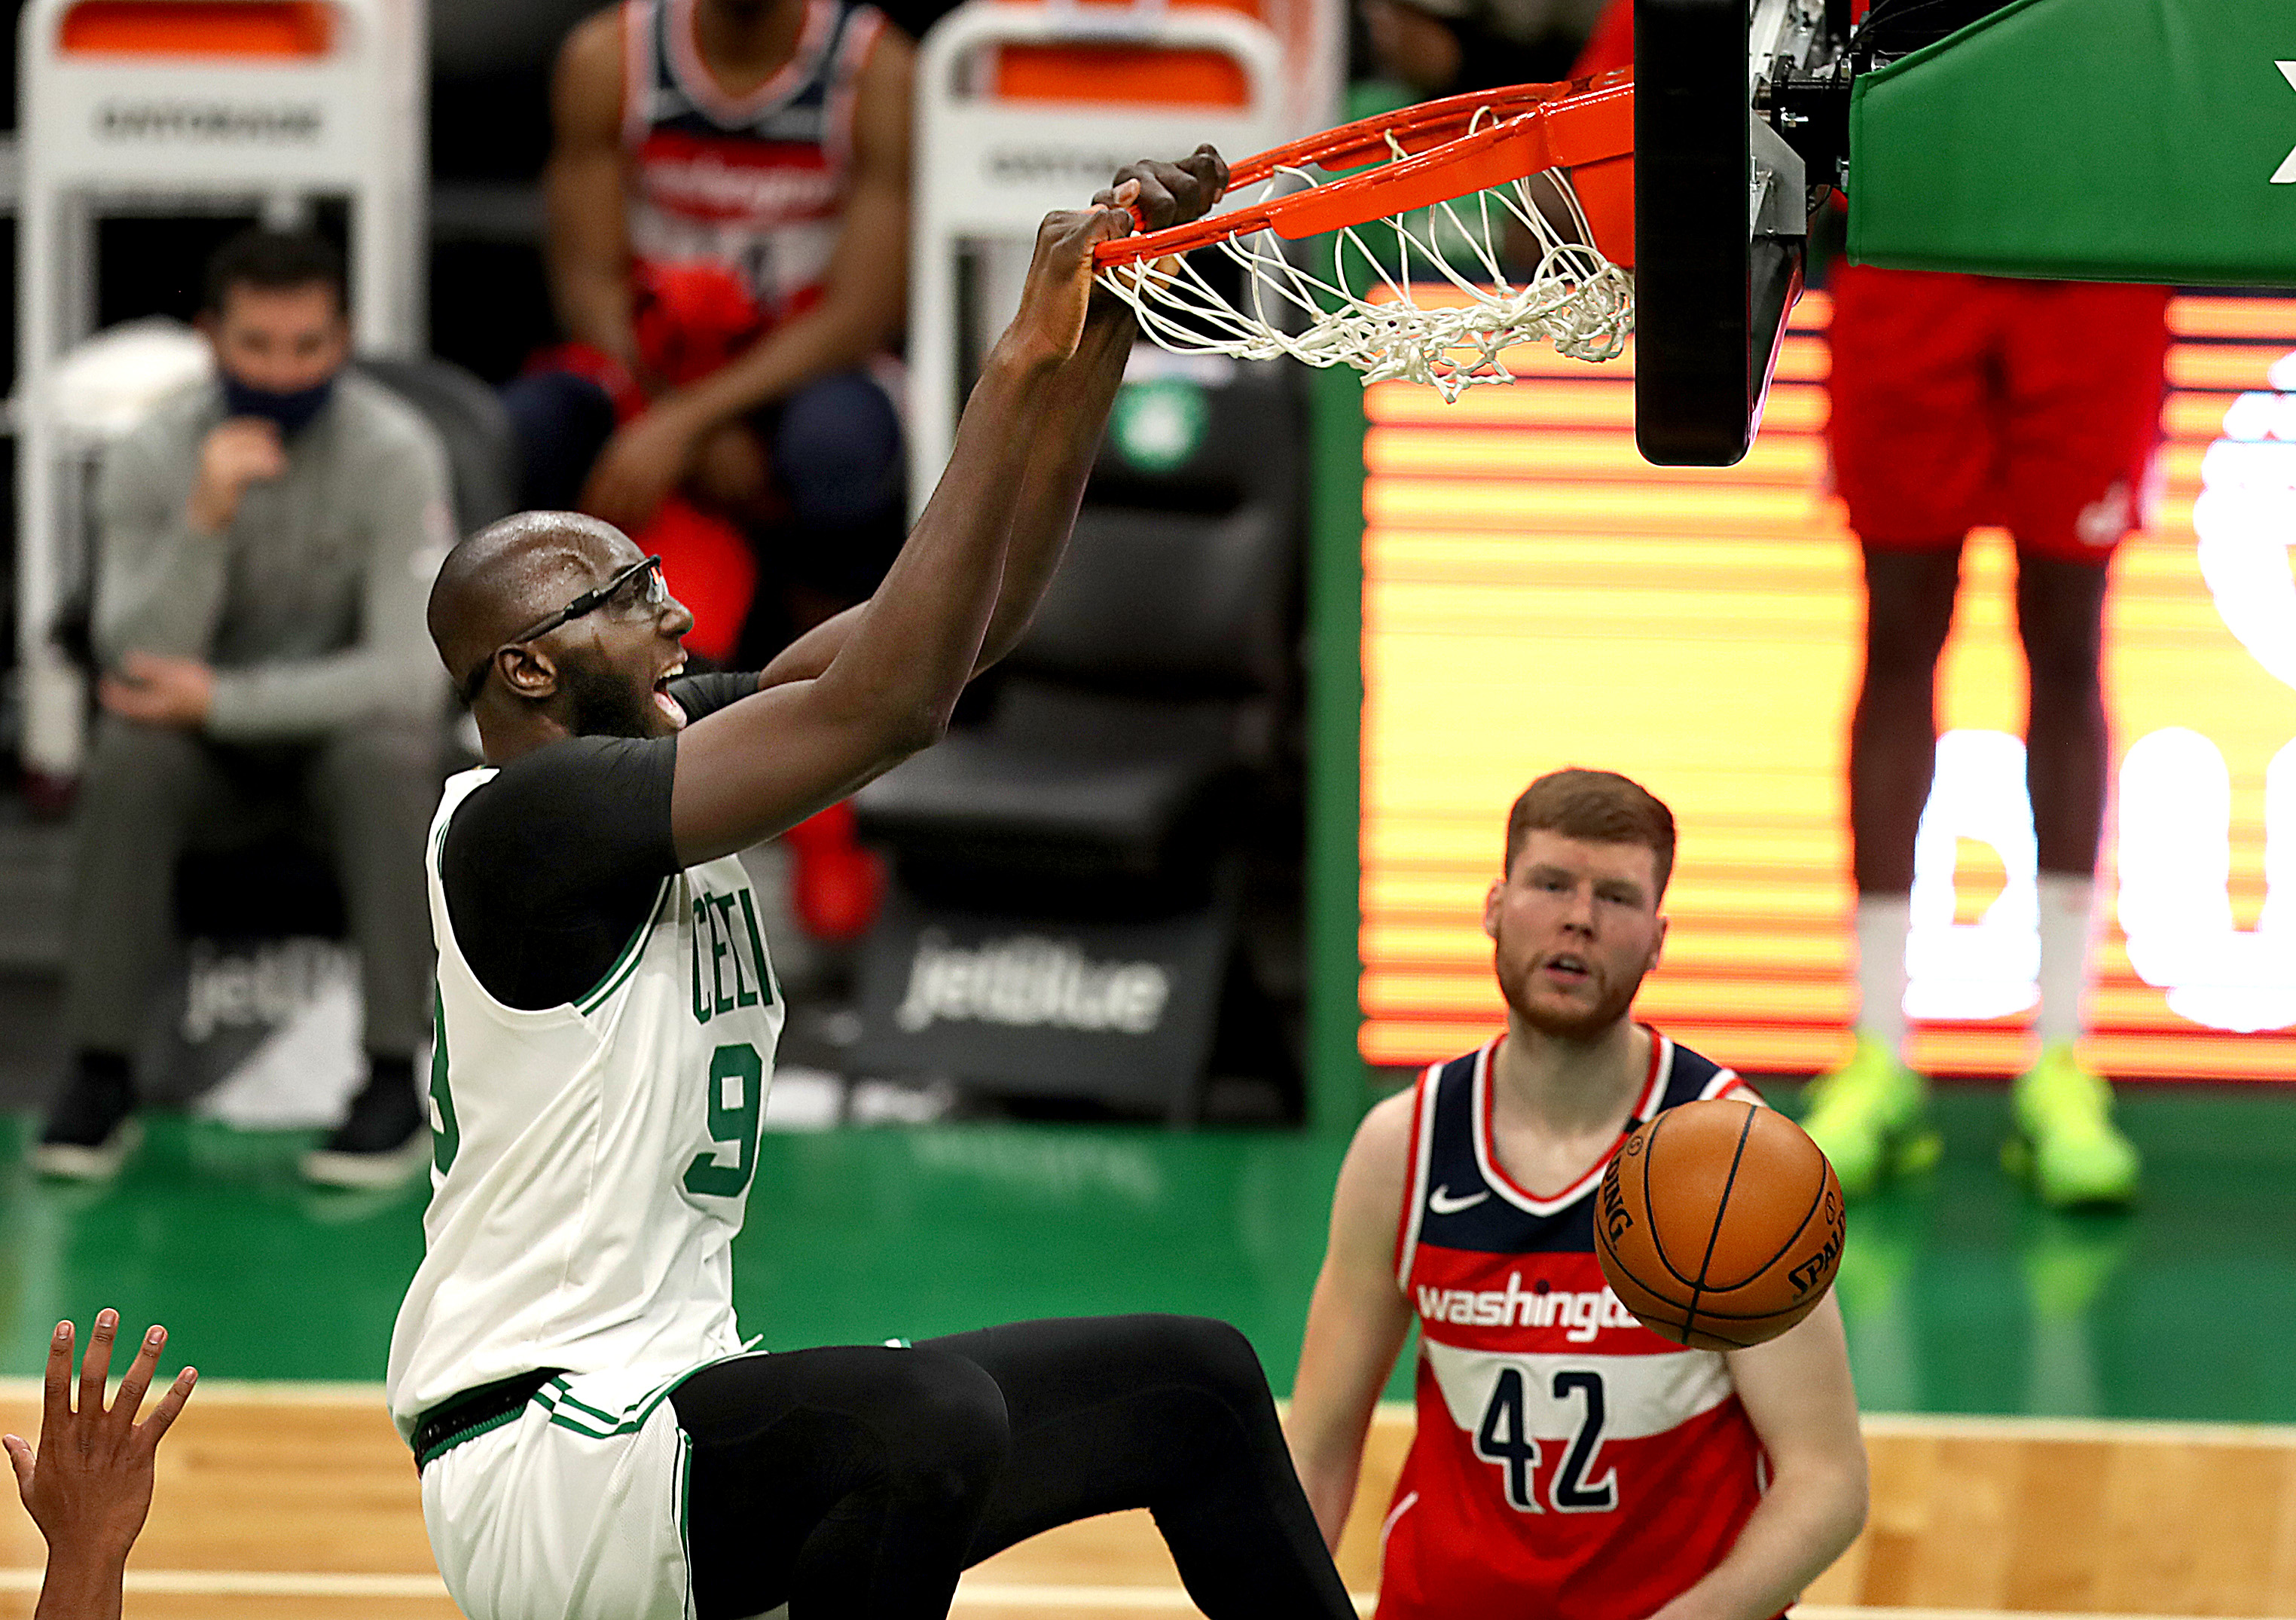 CelticsBlog Pod: Is Tacko Fall sticking with Boston? - CelticsBlog